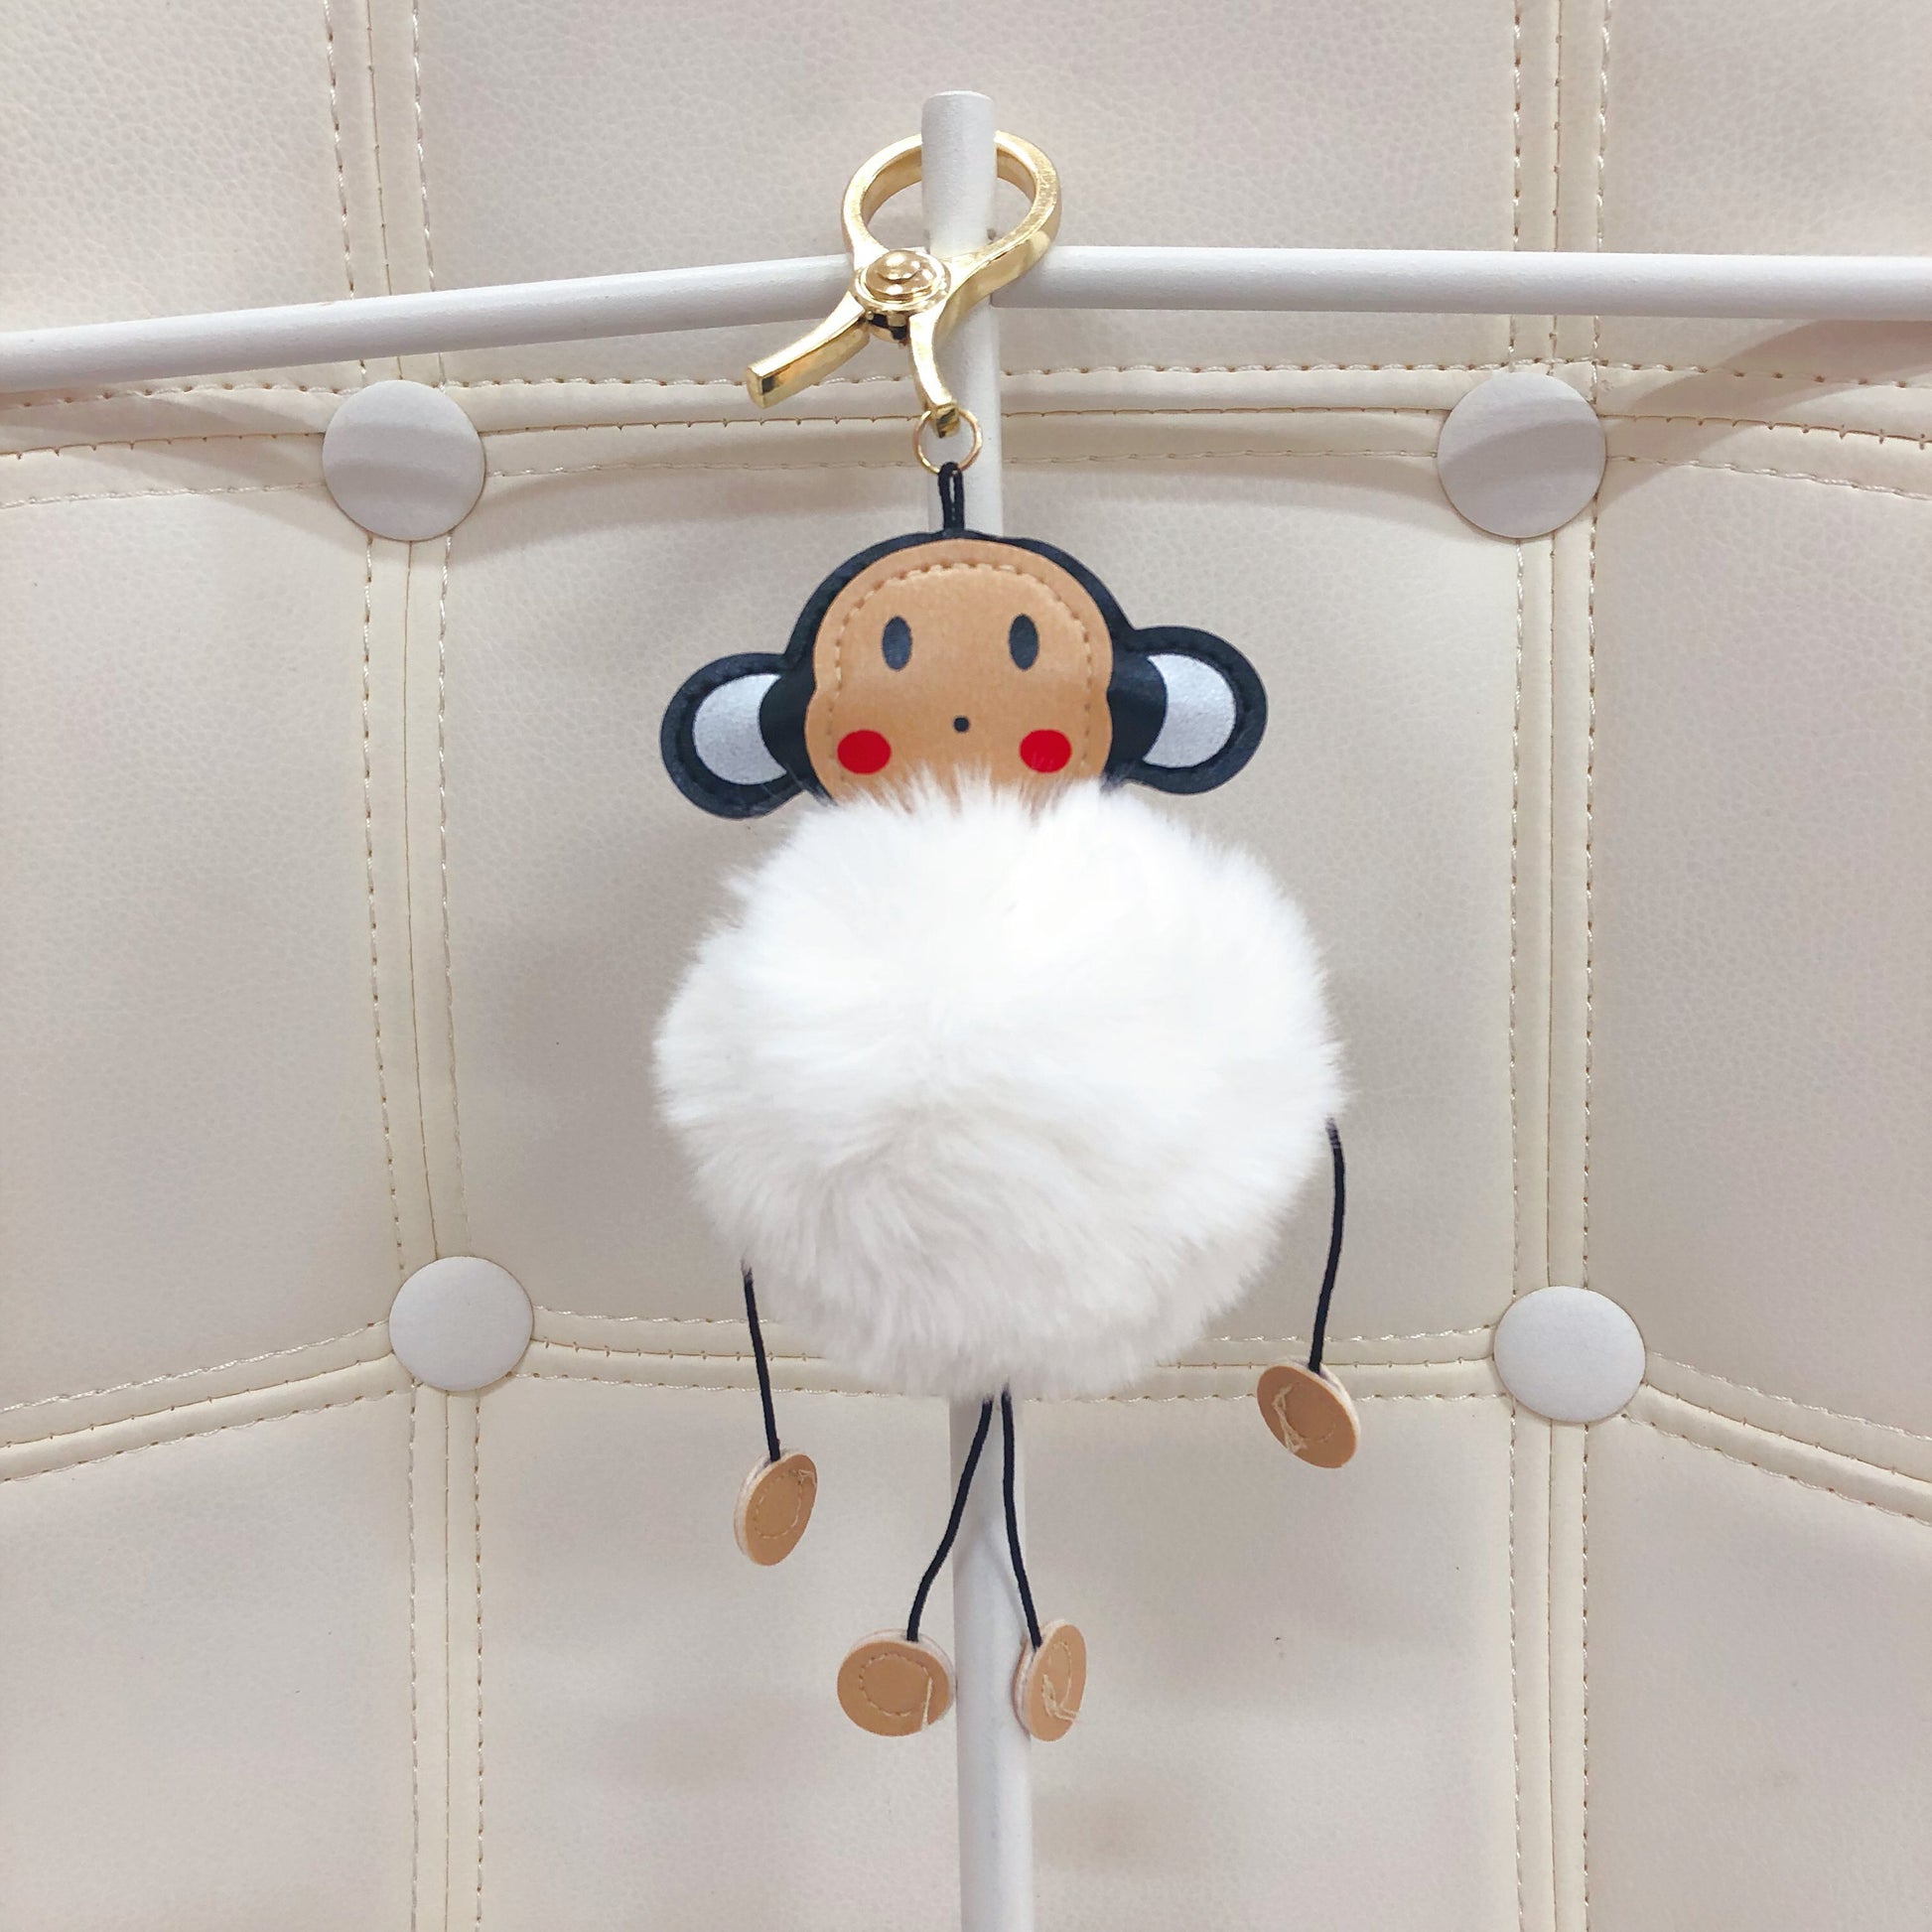 Monkey with fur ball bag charm by Tomorrow Closet